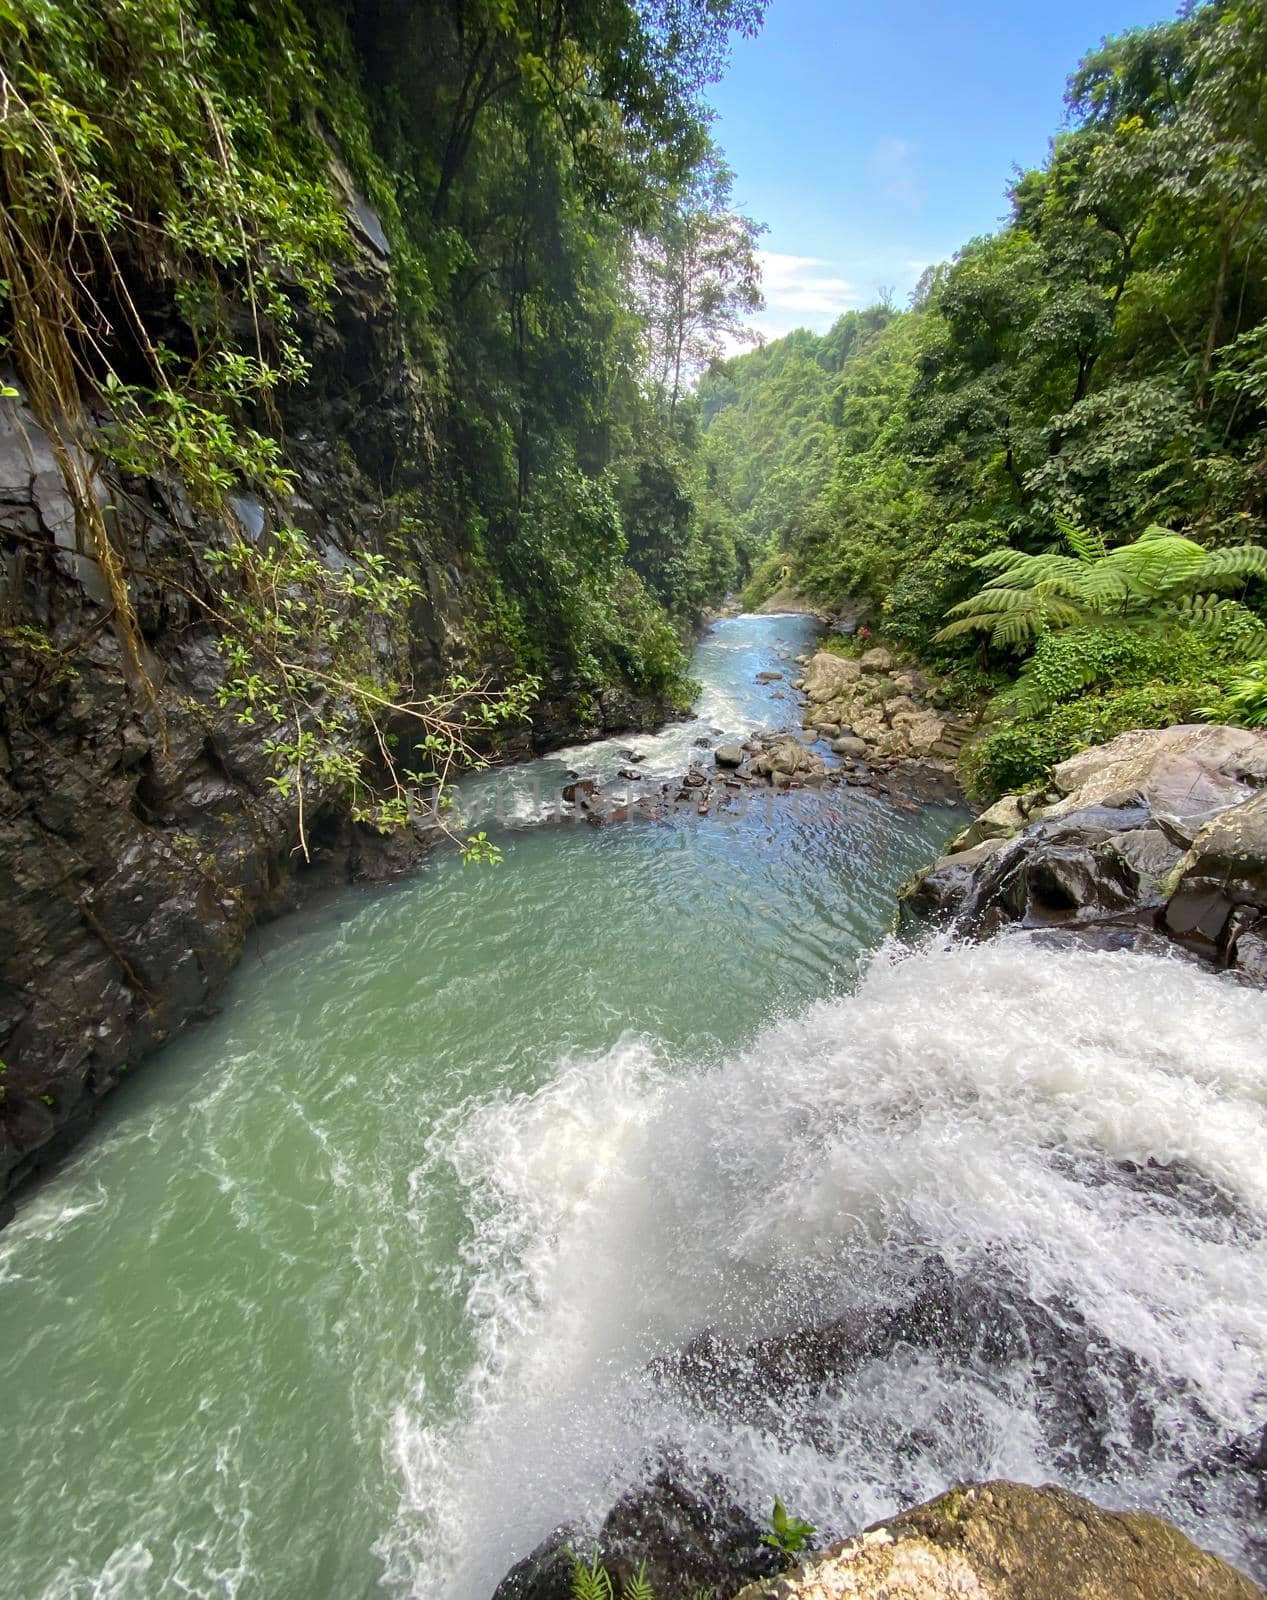 Aling-Aling Waterfall, Bali, Indonesia - stock photo. High quality photo